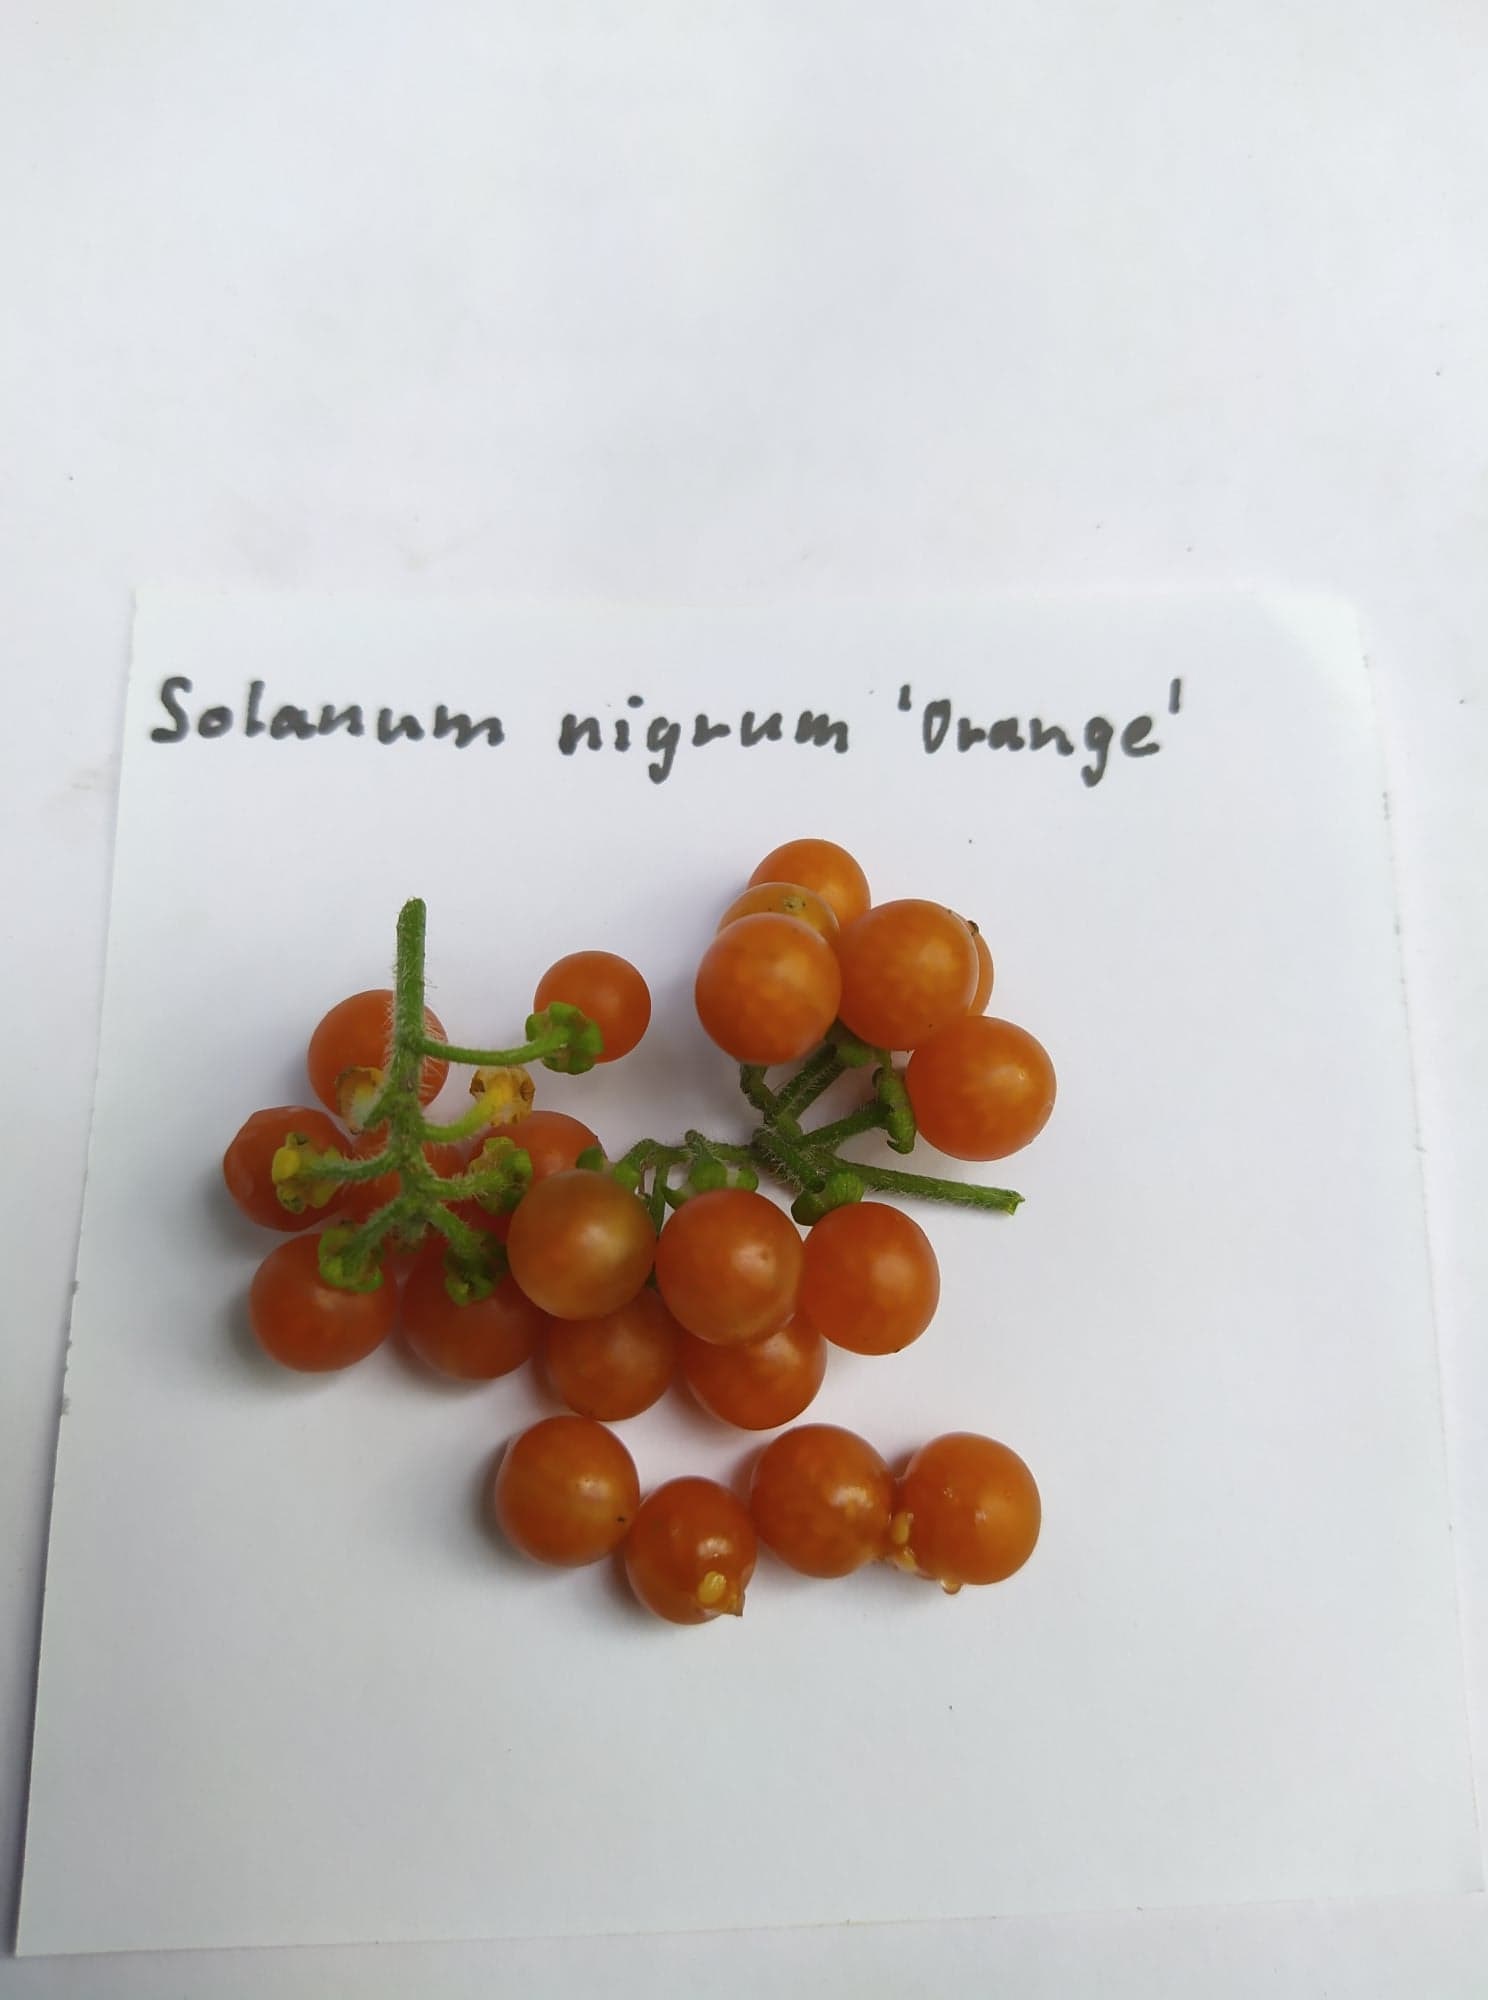 Lilek oranžovoplodý - Solanum nigrum "Orange", 30 semen